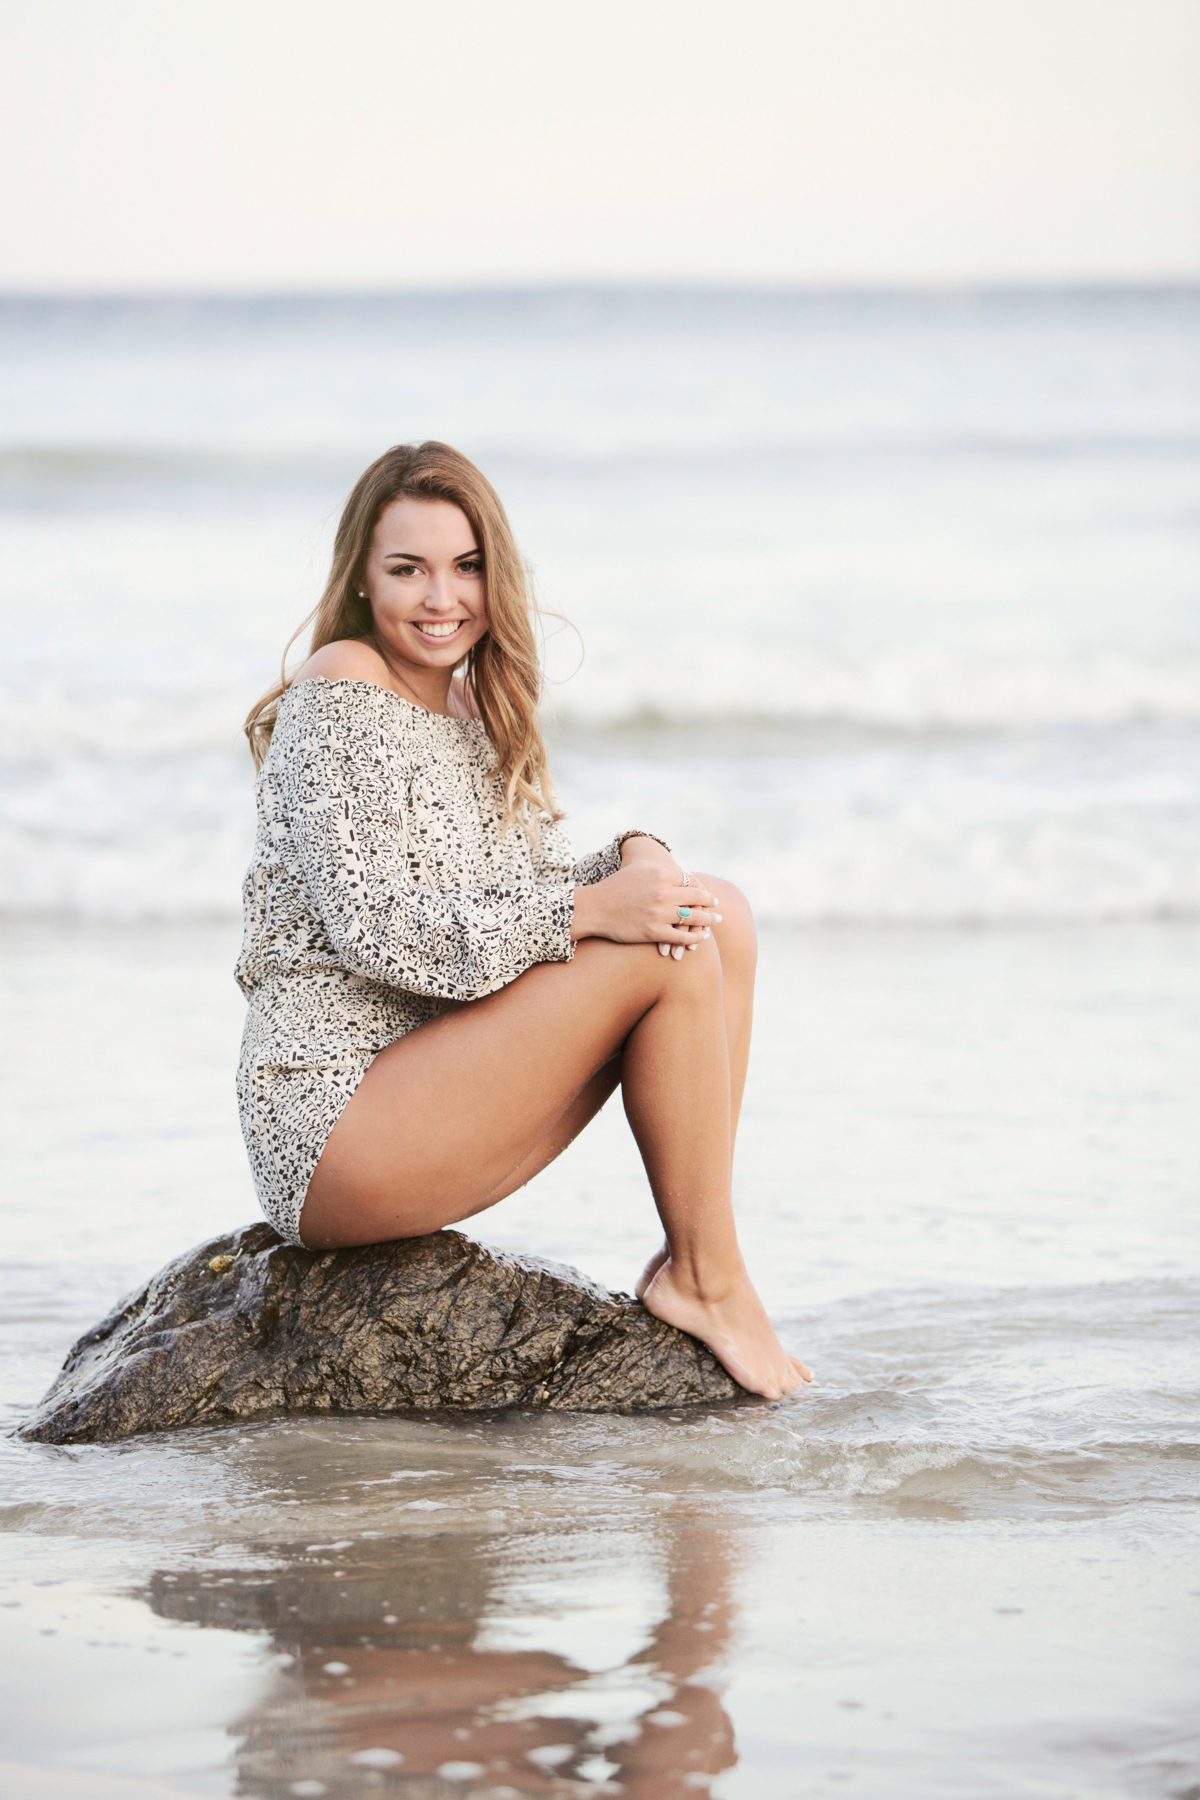 Senior Portrait sitting on rock in water